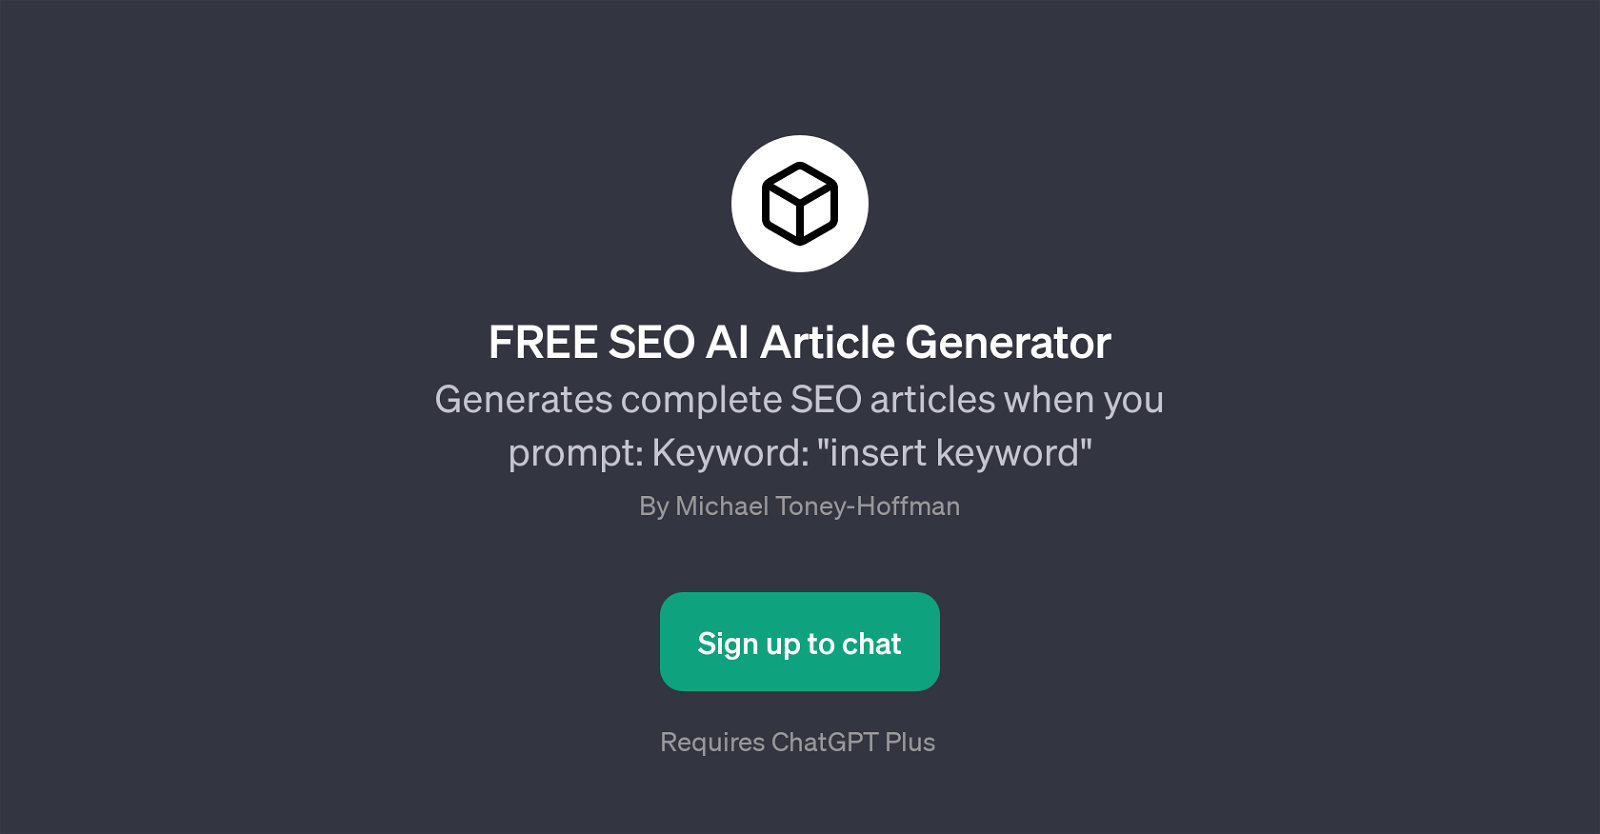 FREE SEO AI Article Generator website